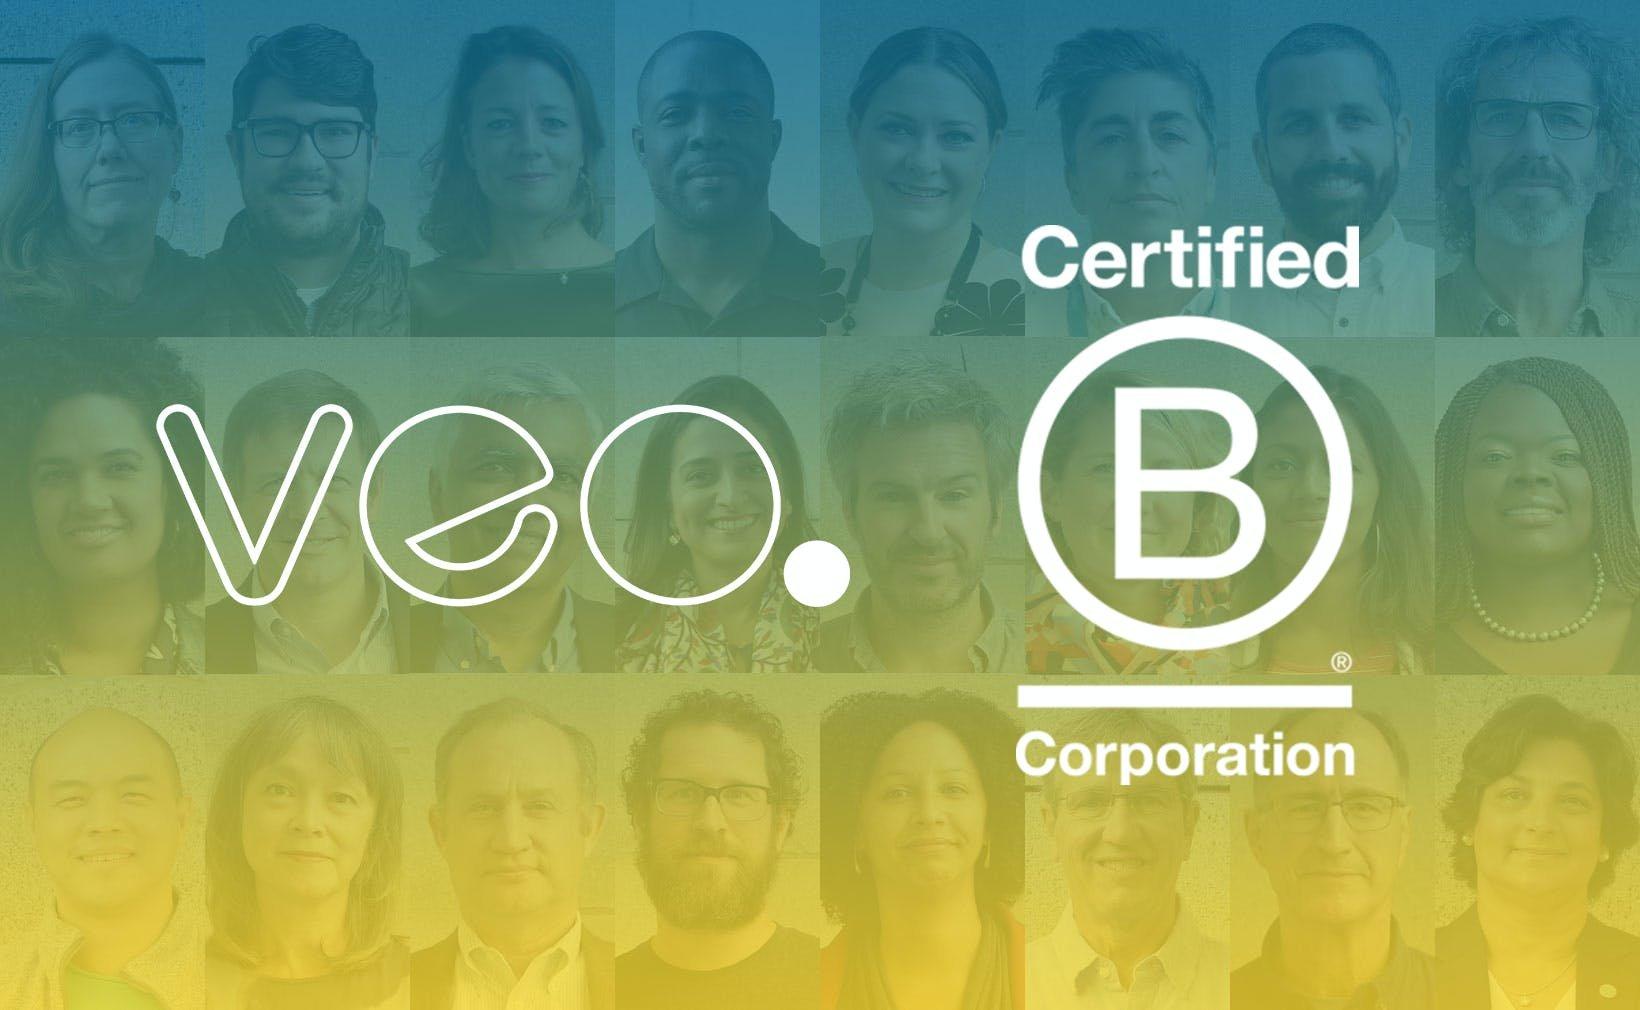 Veo certified B corporation